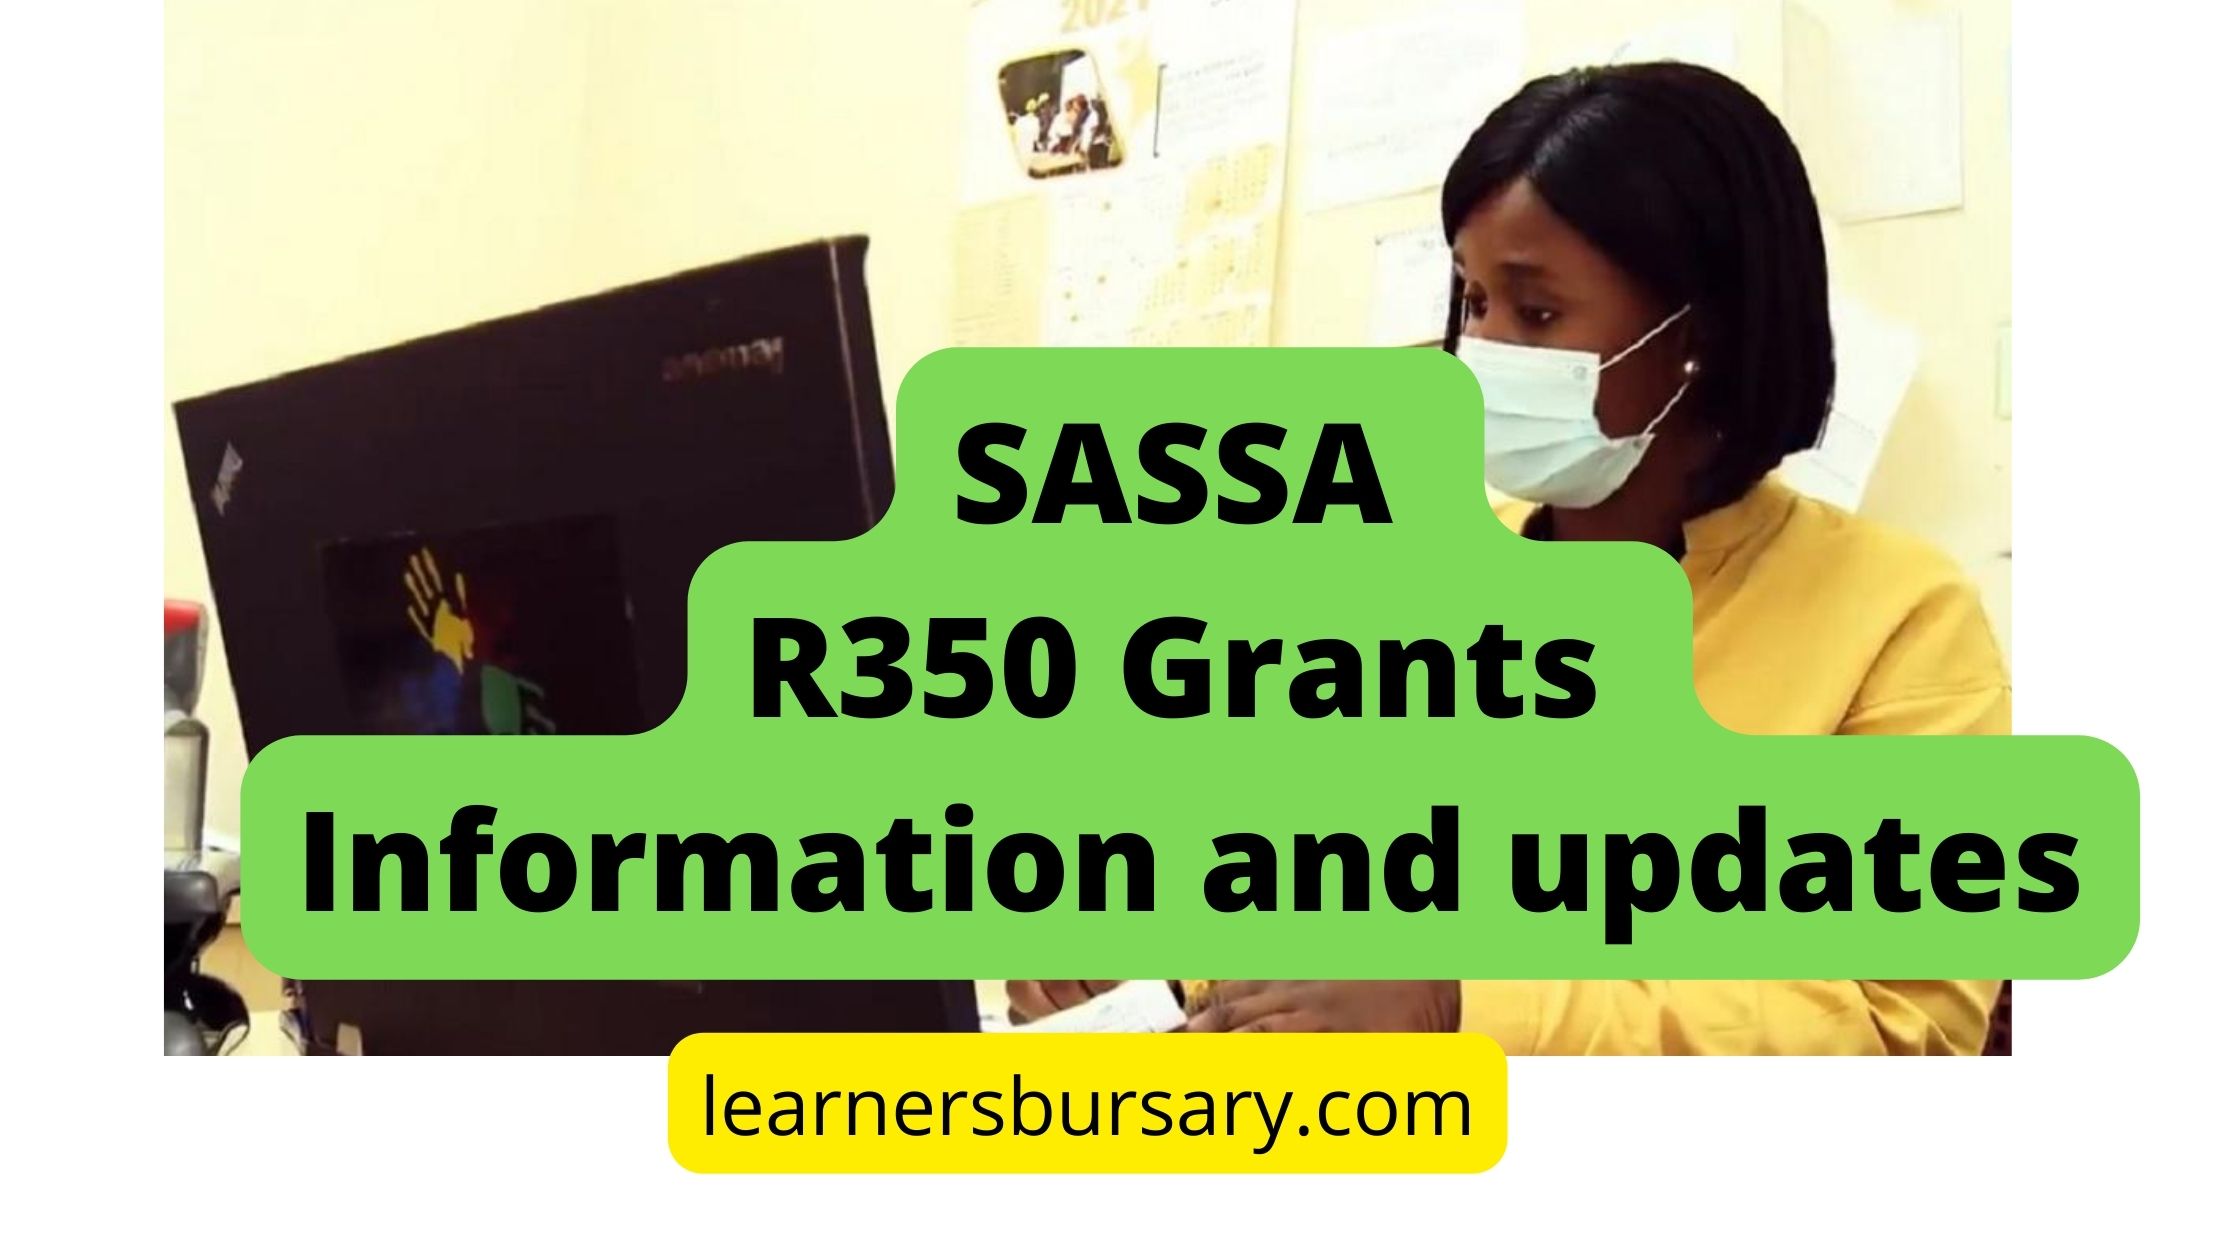 SASSA R350 Grants Information and updates